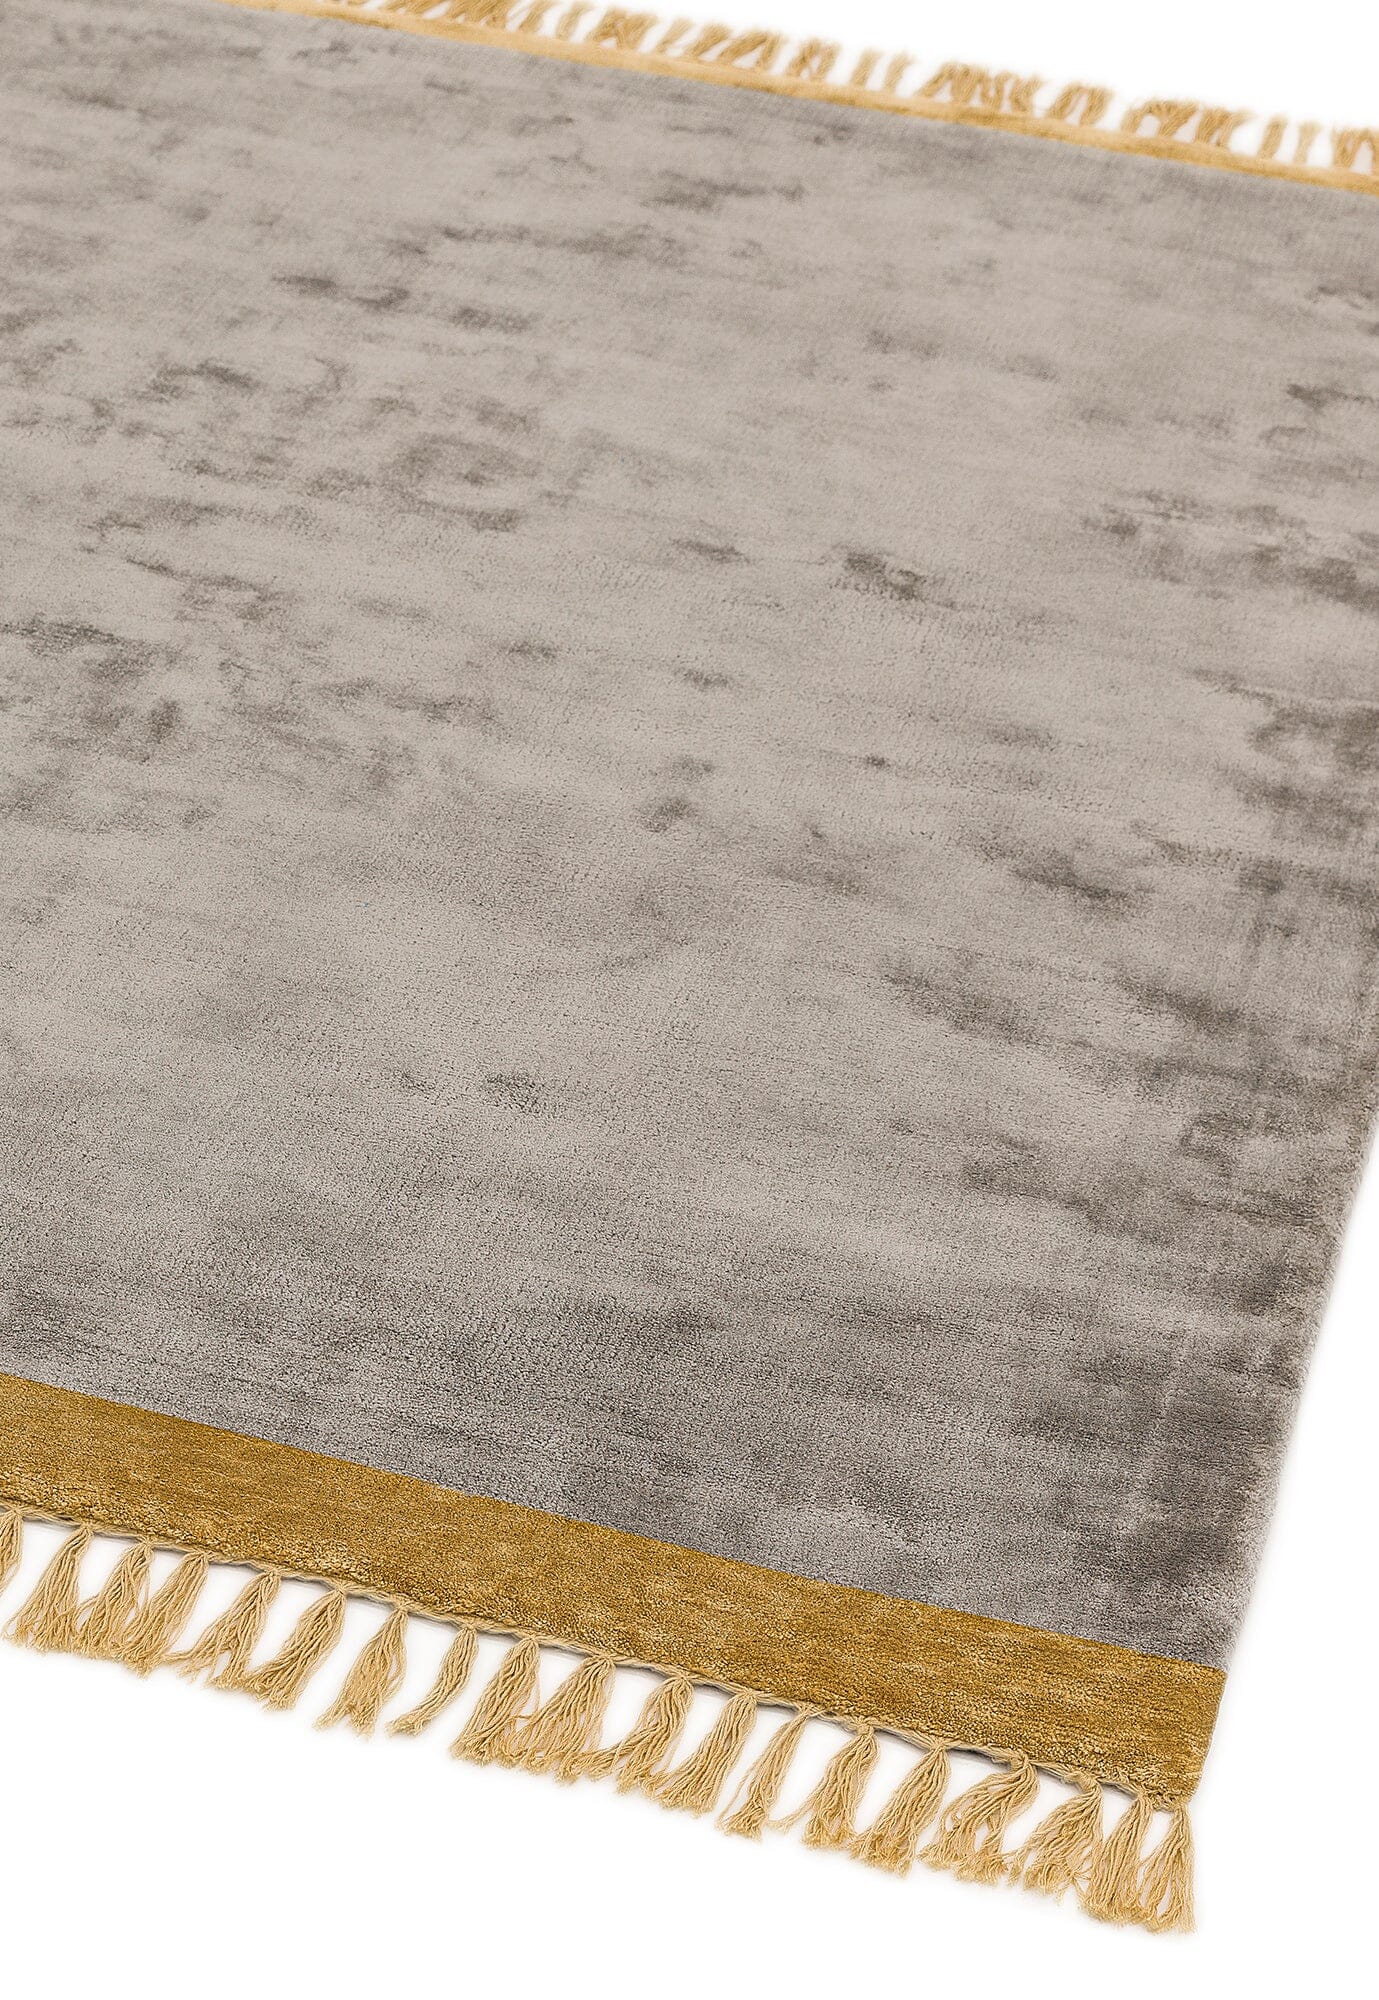 Asiatic Carpets Elgin Hand Woven Rug Silver/ Mustard Border - 160 x 230cm